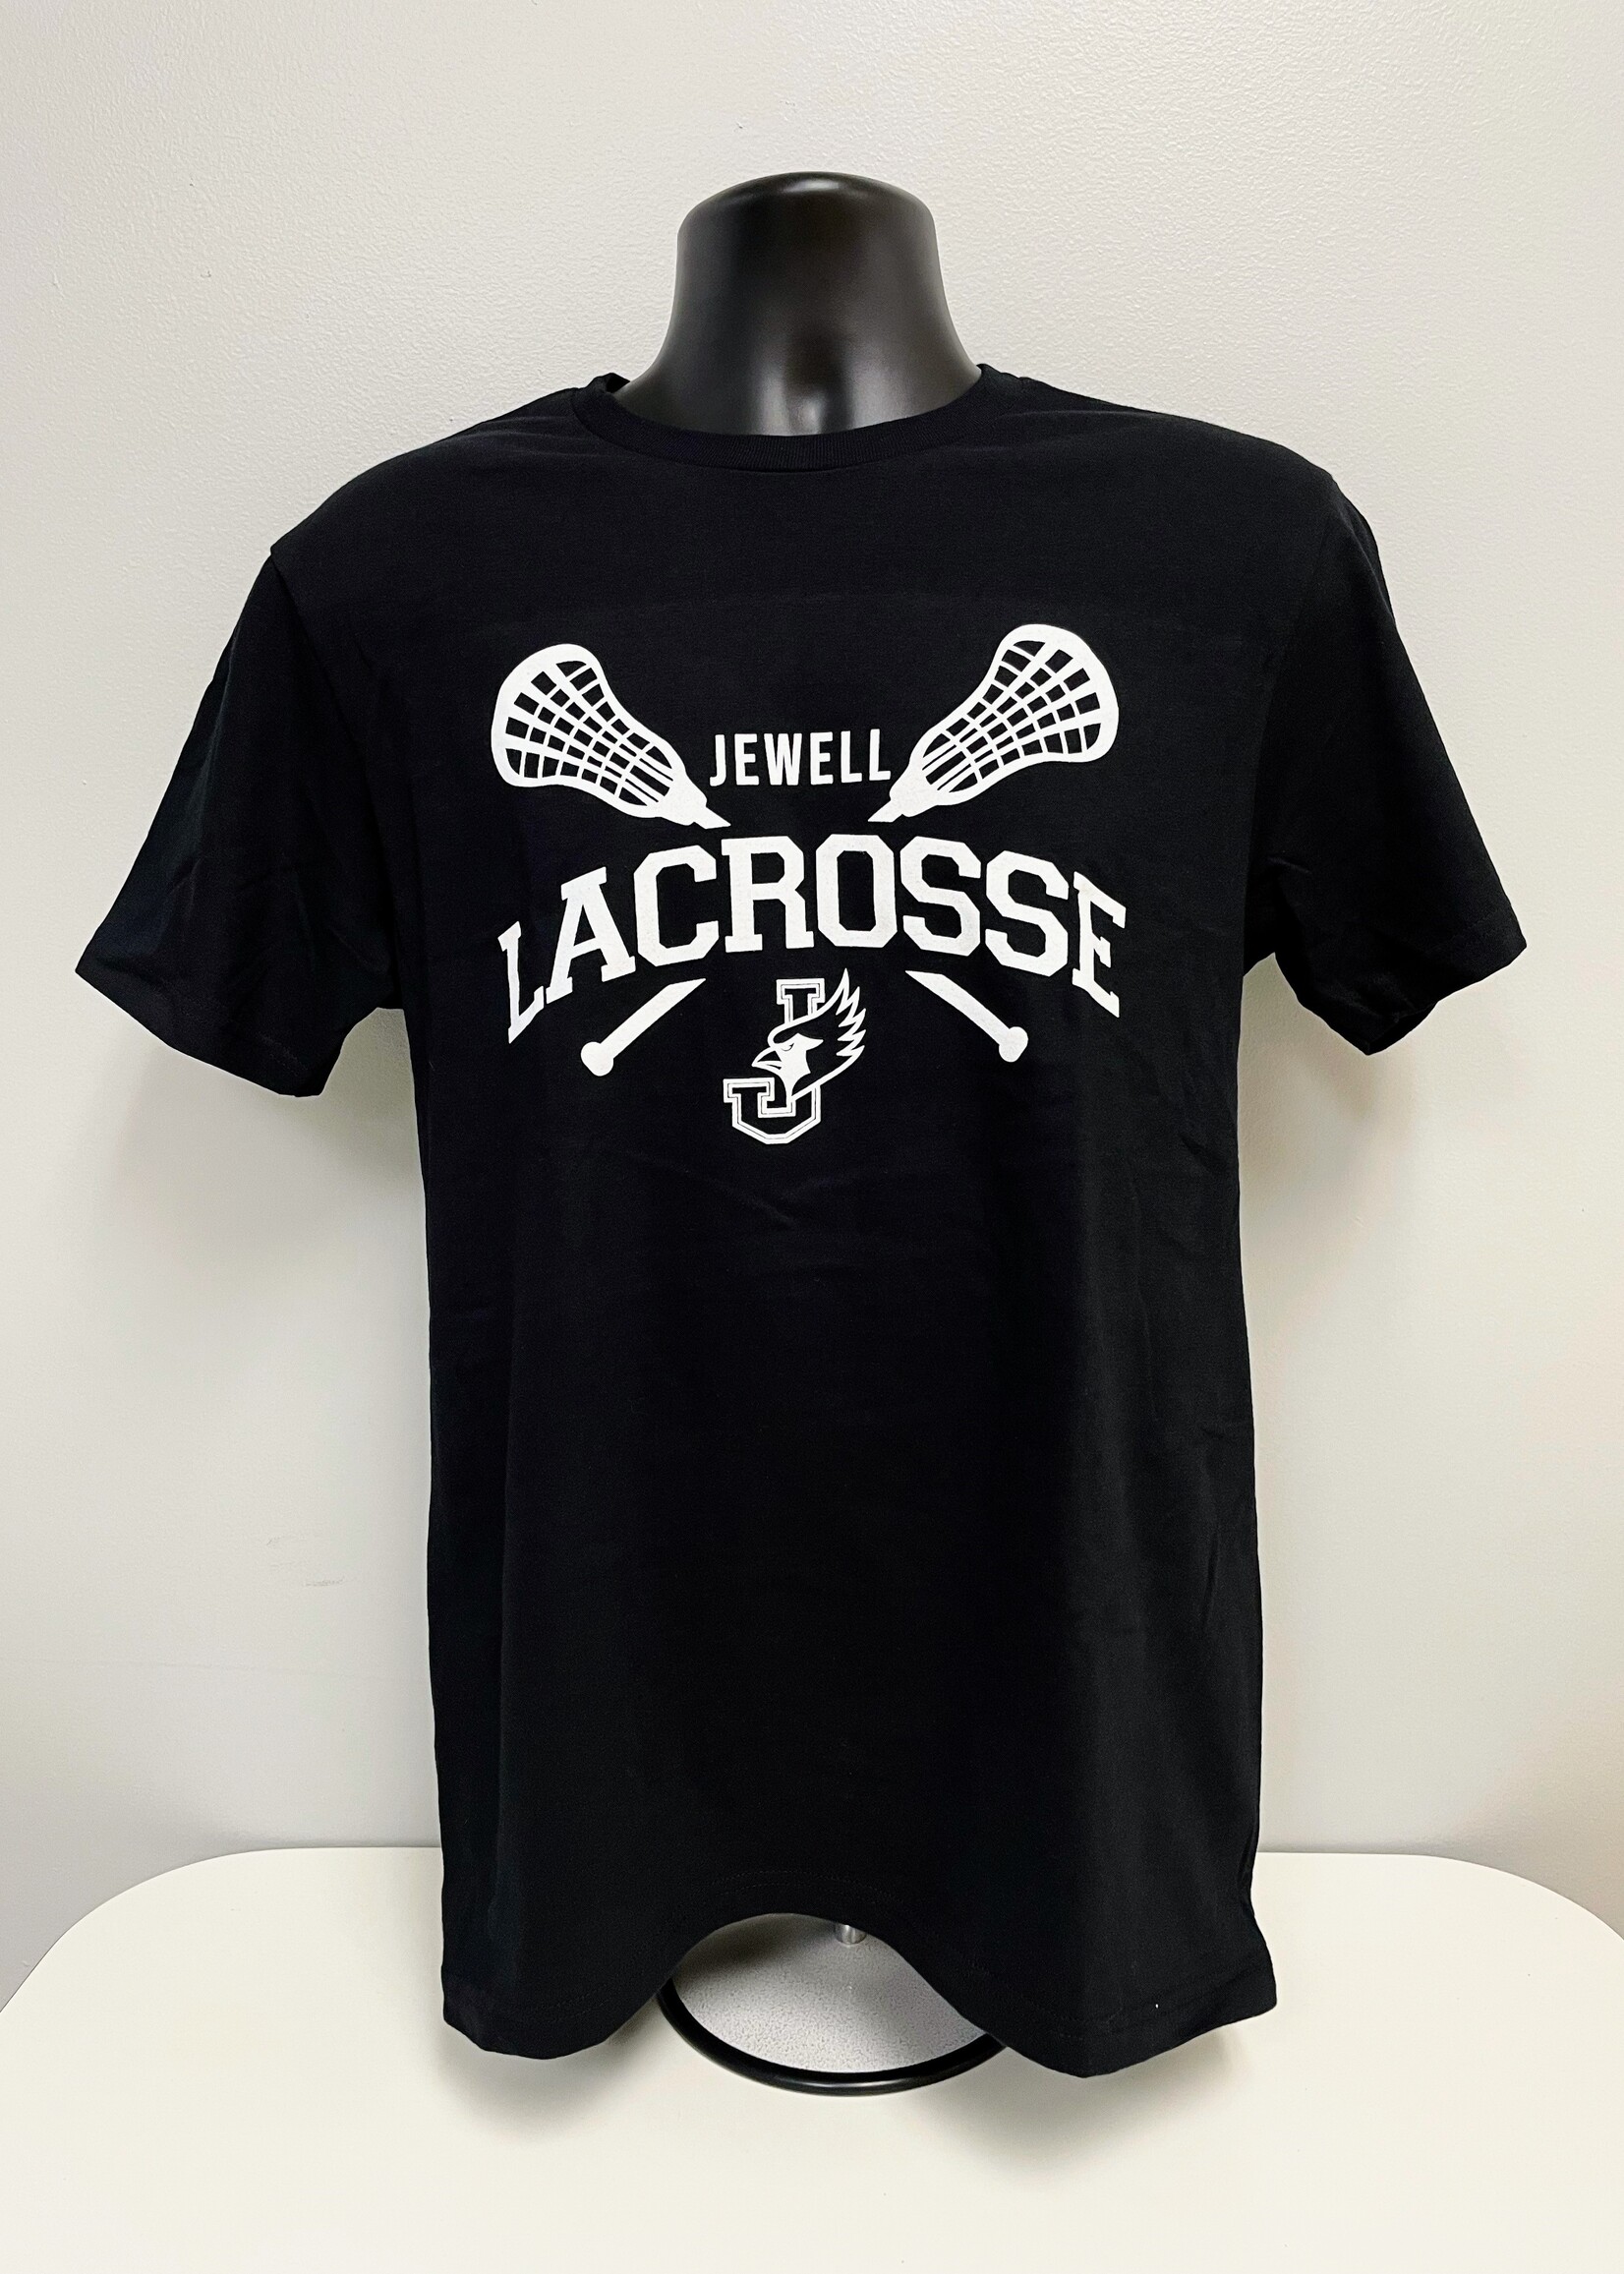 Short Sleeve Lacrosse / Crosse with Jewell Logo